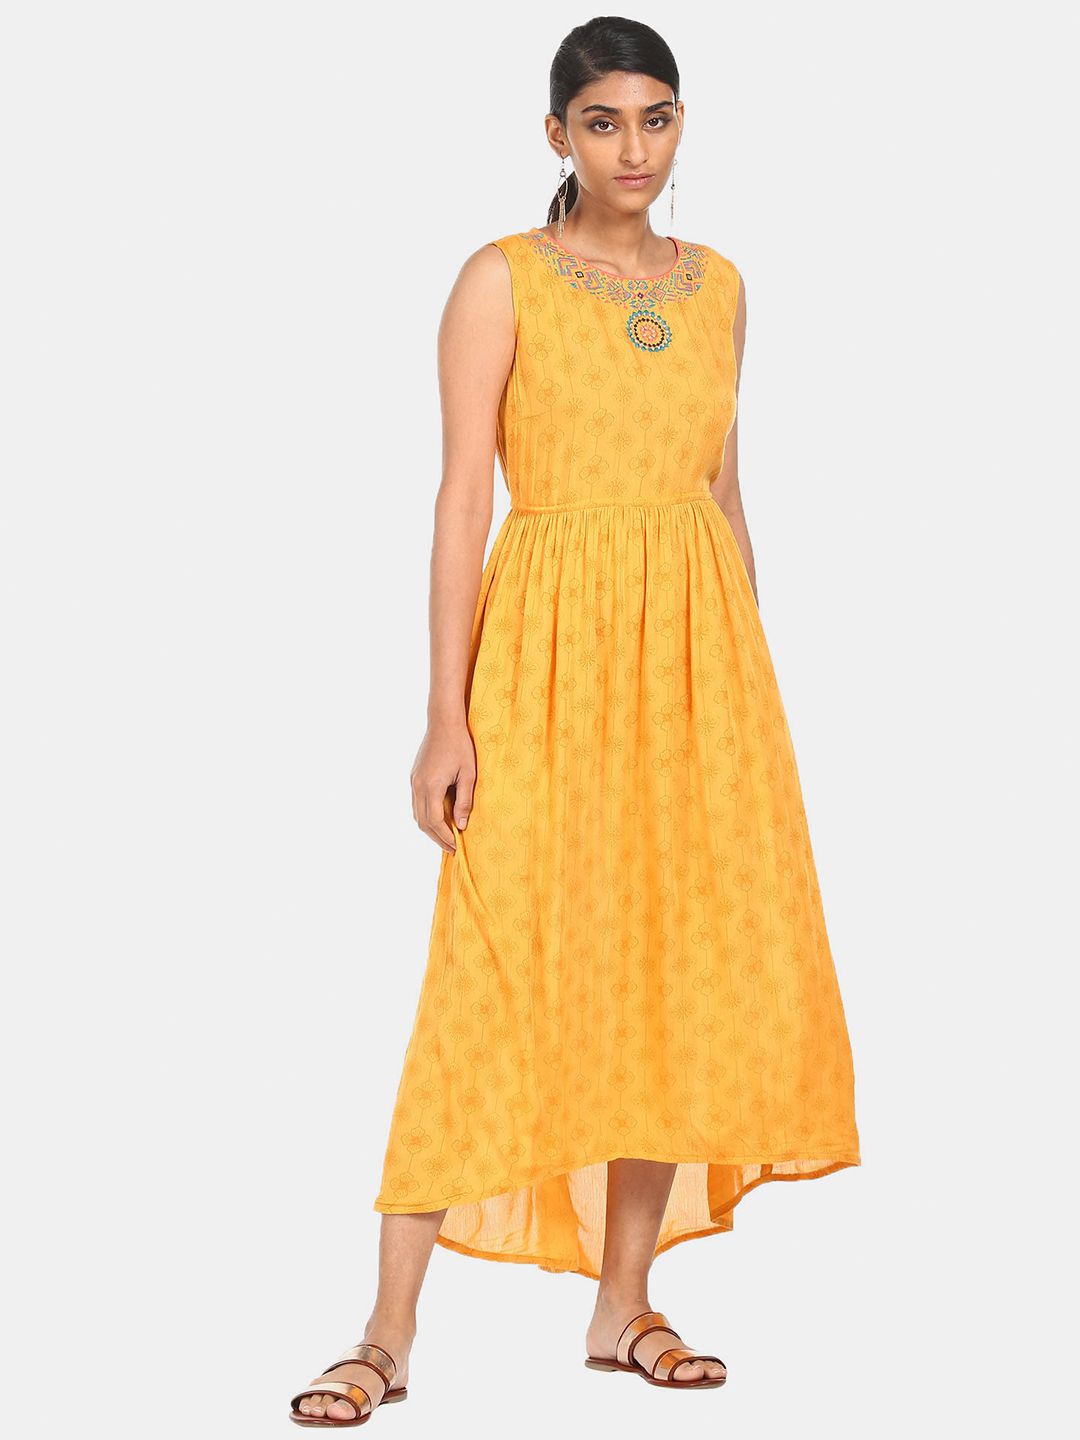 Karigari Yellow Ethnic Motifs Embroidered Midi Dress Price in India